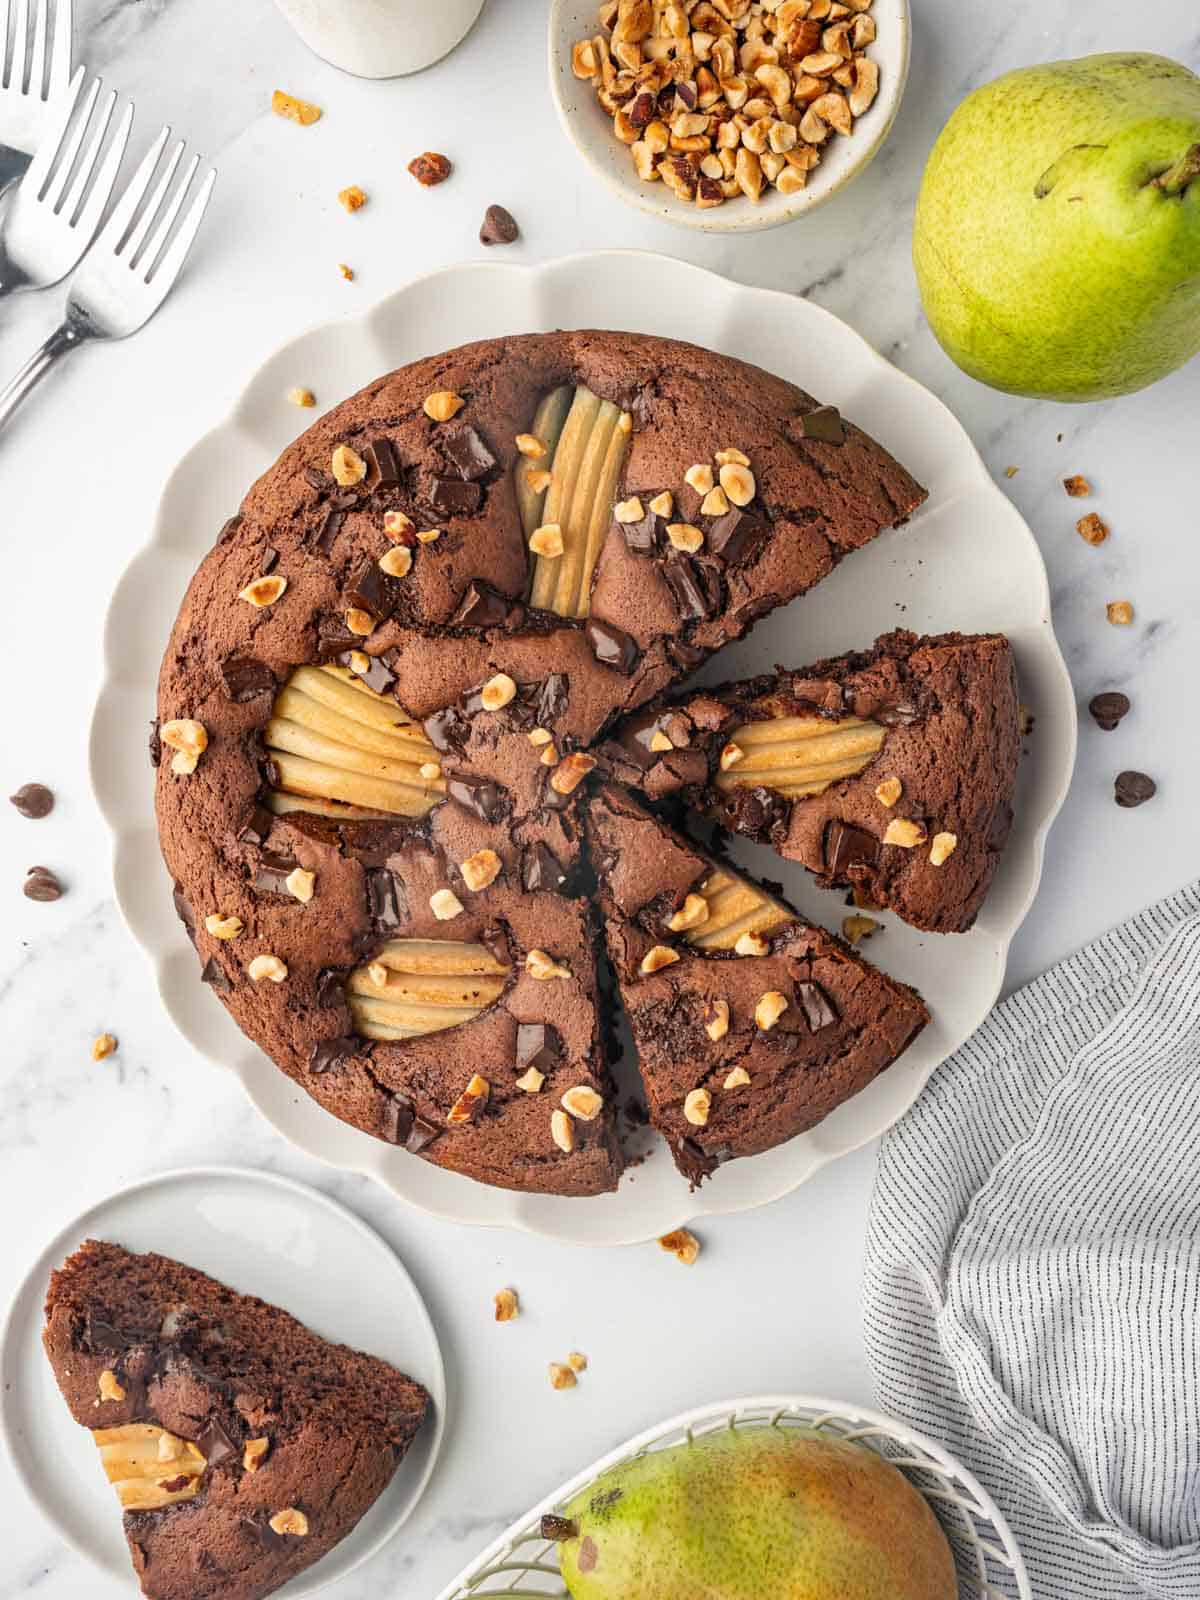 Chocolate Cake with Pears